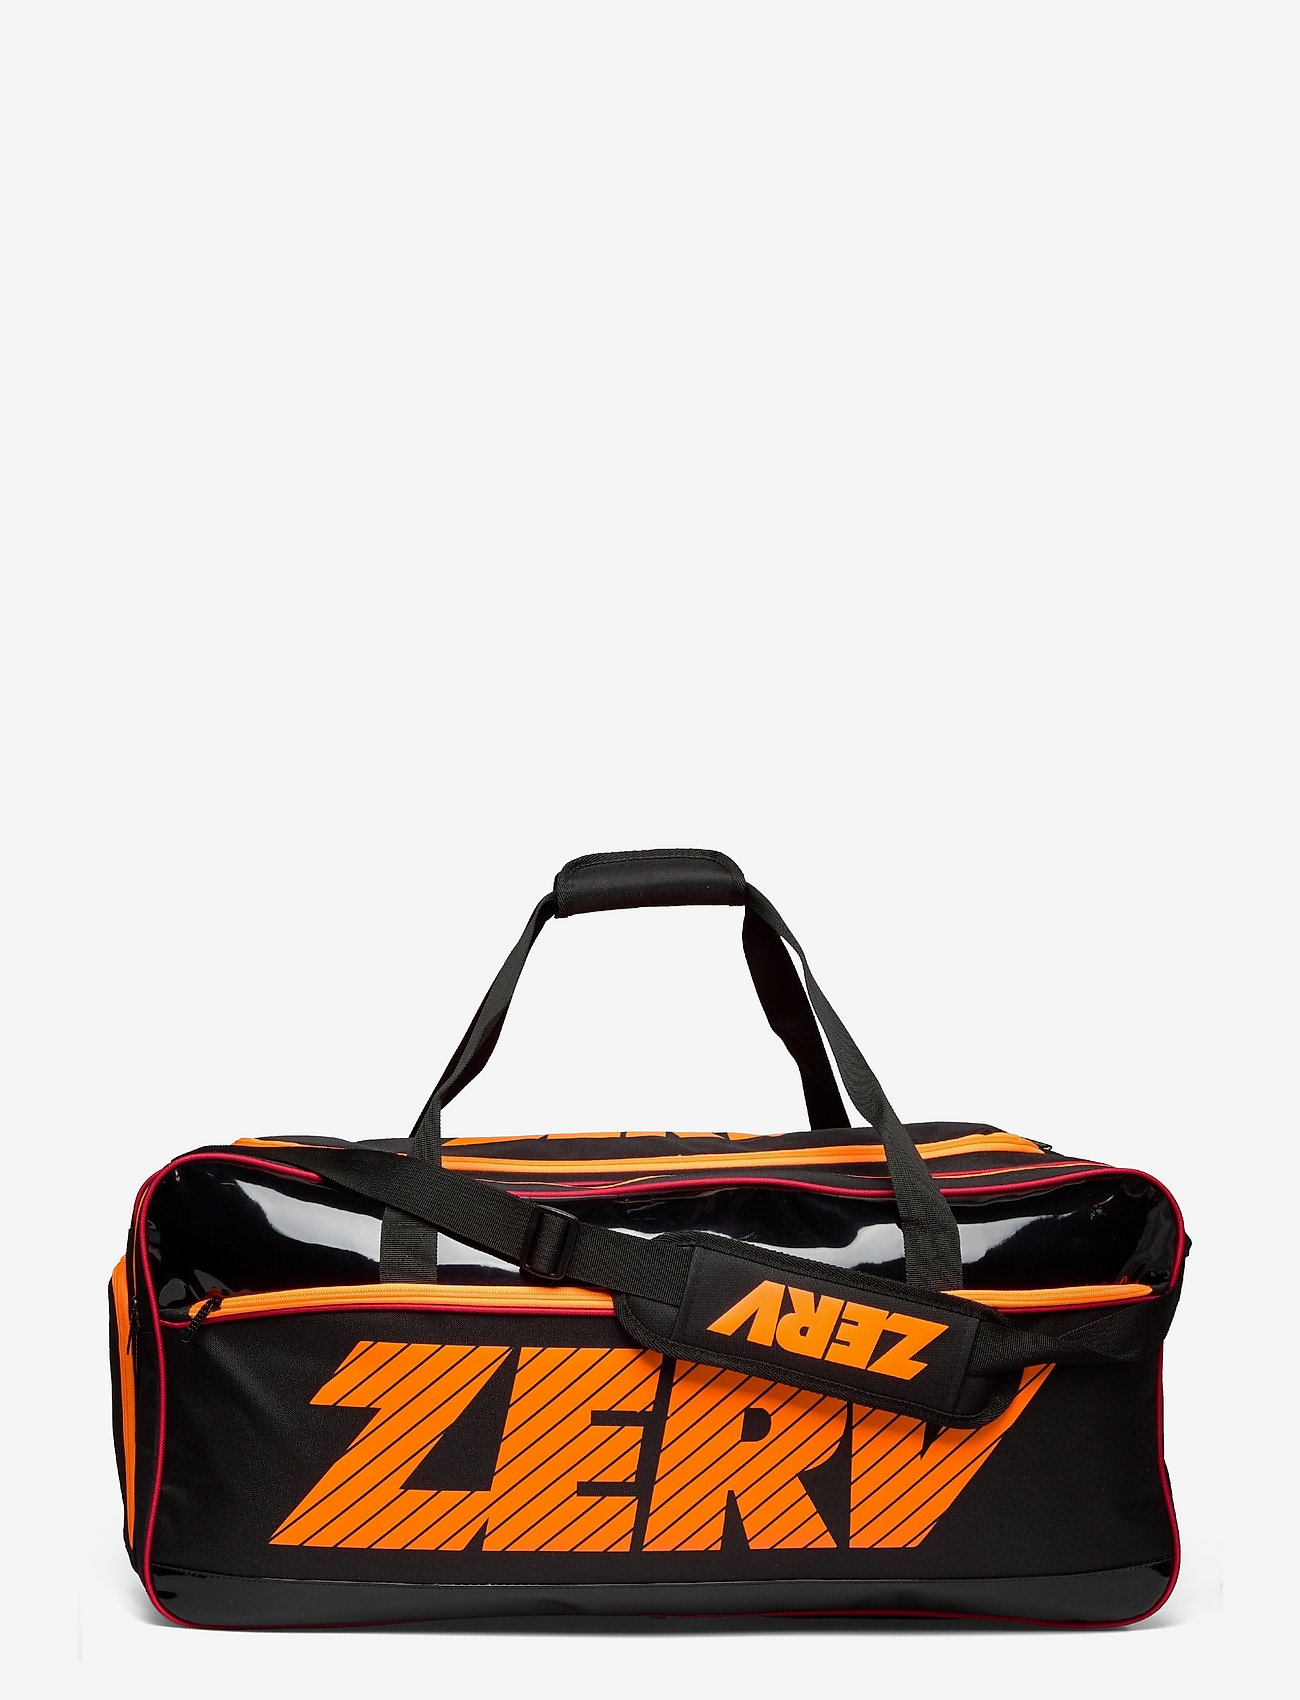 Zerv - ZERV Thunder Square Pro Bag - mailapelilaukut - black/orange - 0